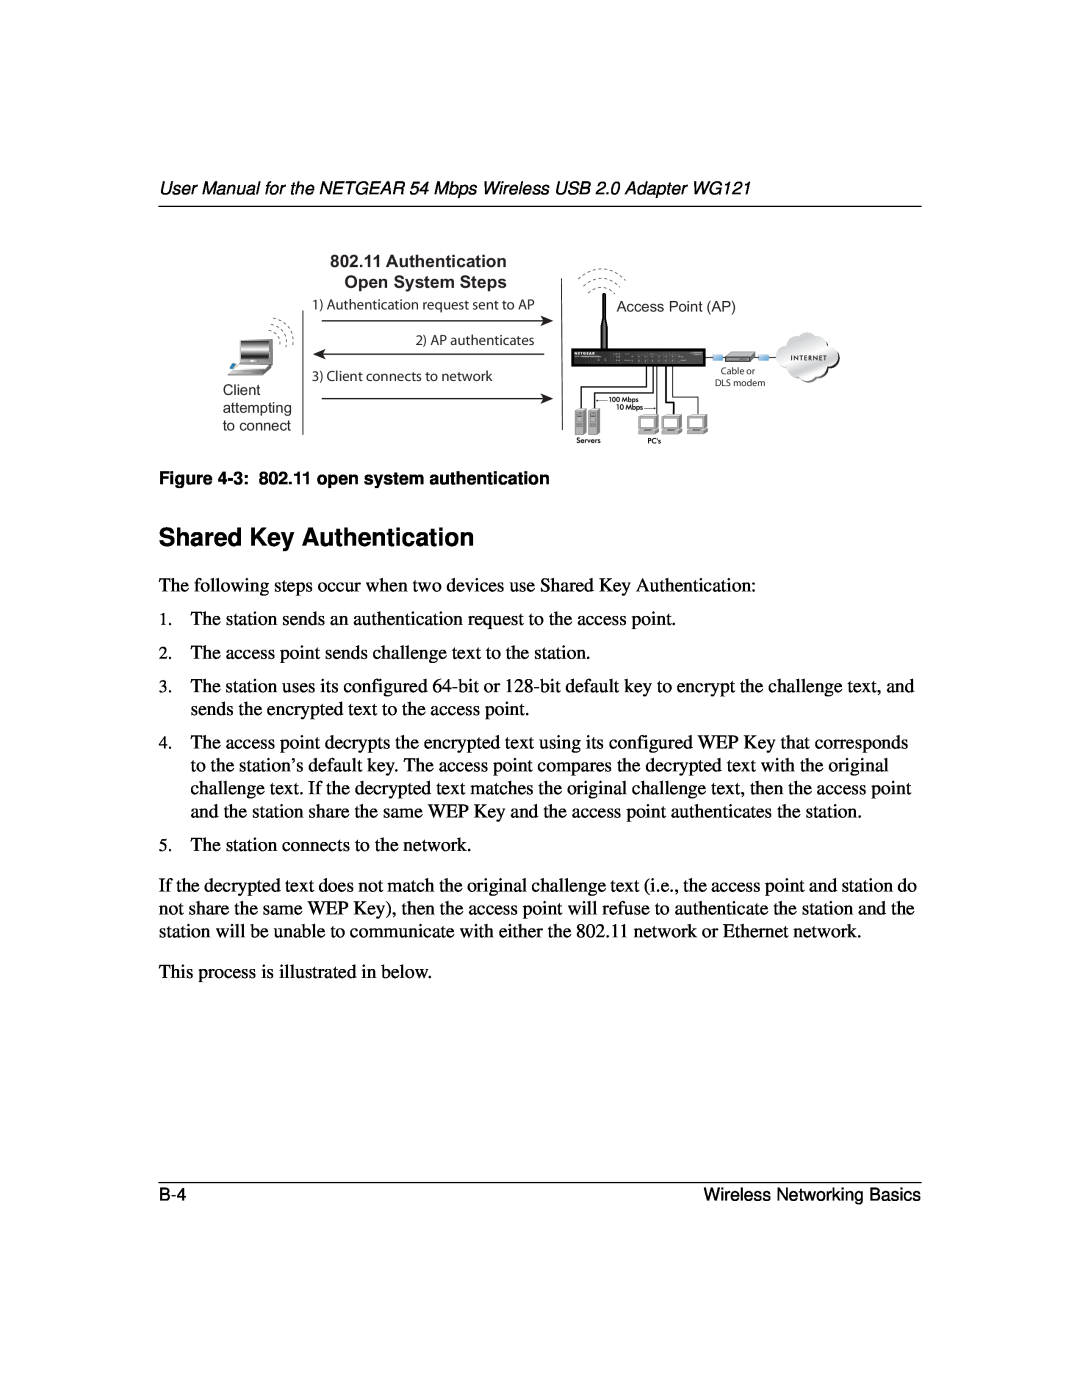 NETGEAR WG121 Authentication Open System Steps, Authentication request sent to AP 2 AP authenticates, Access Point AP 